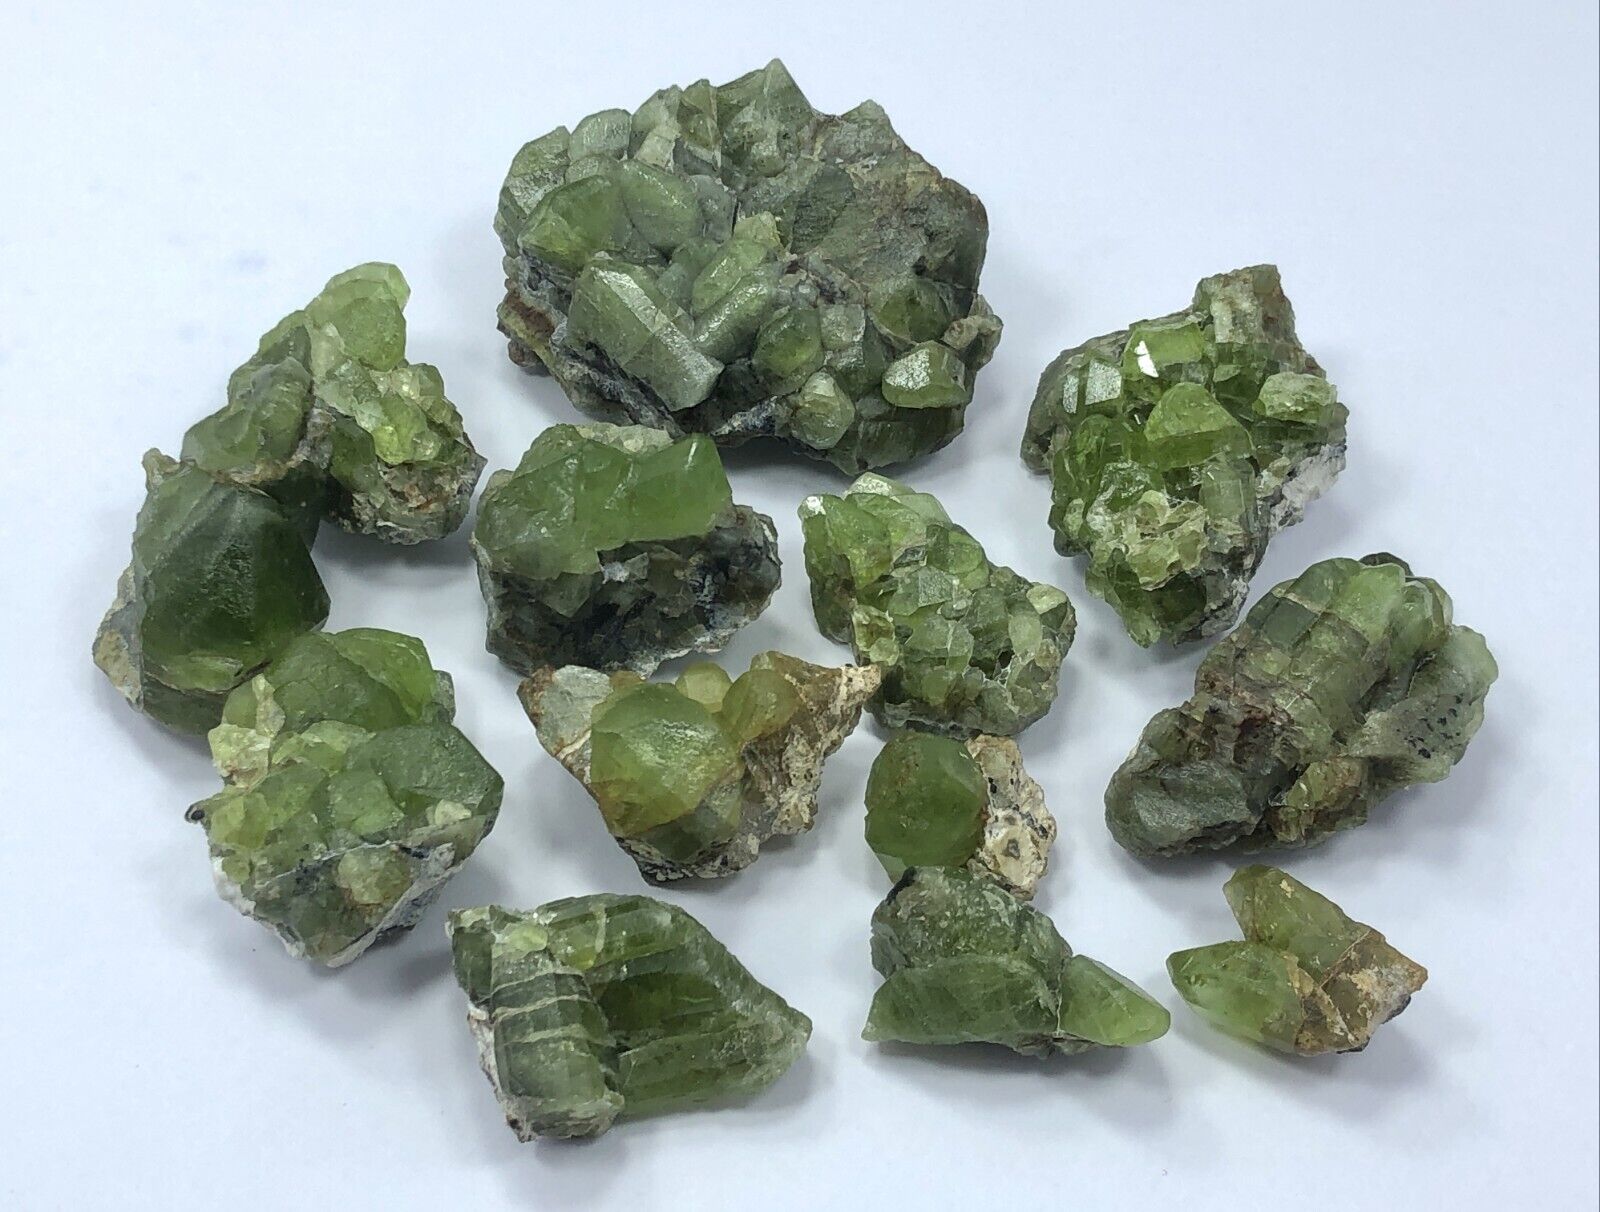 295 Gram Peridot Crystals Specimen lot From Pakistan - 13 Pcs 